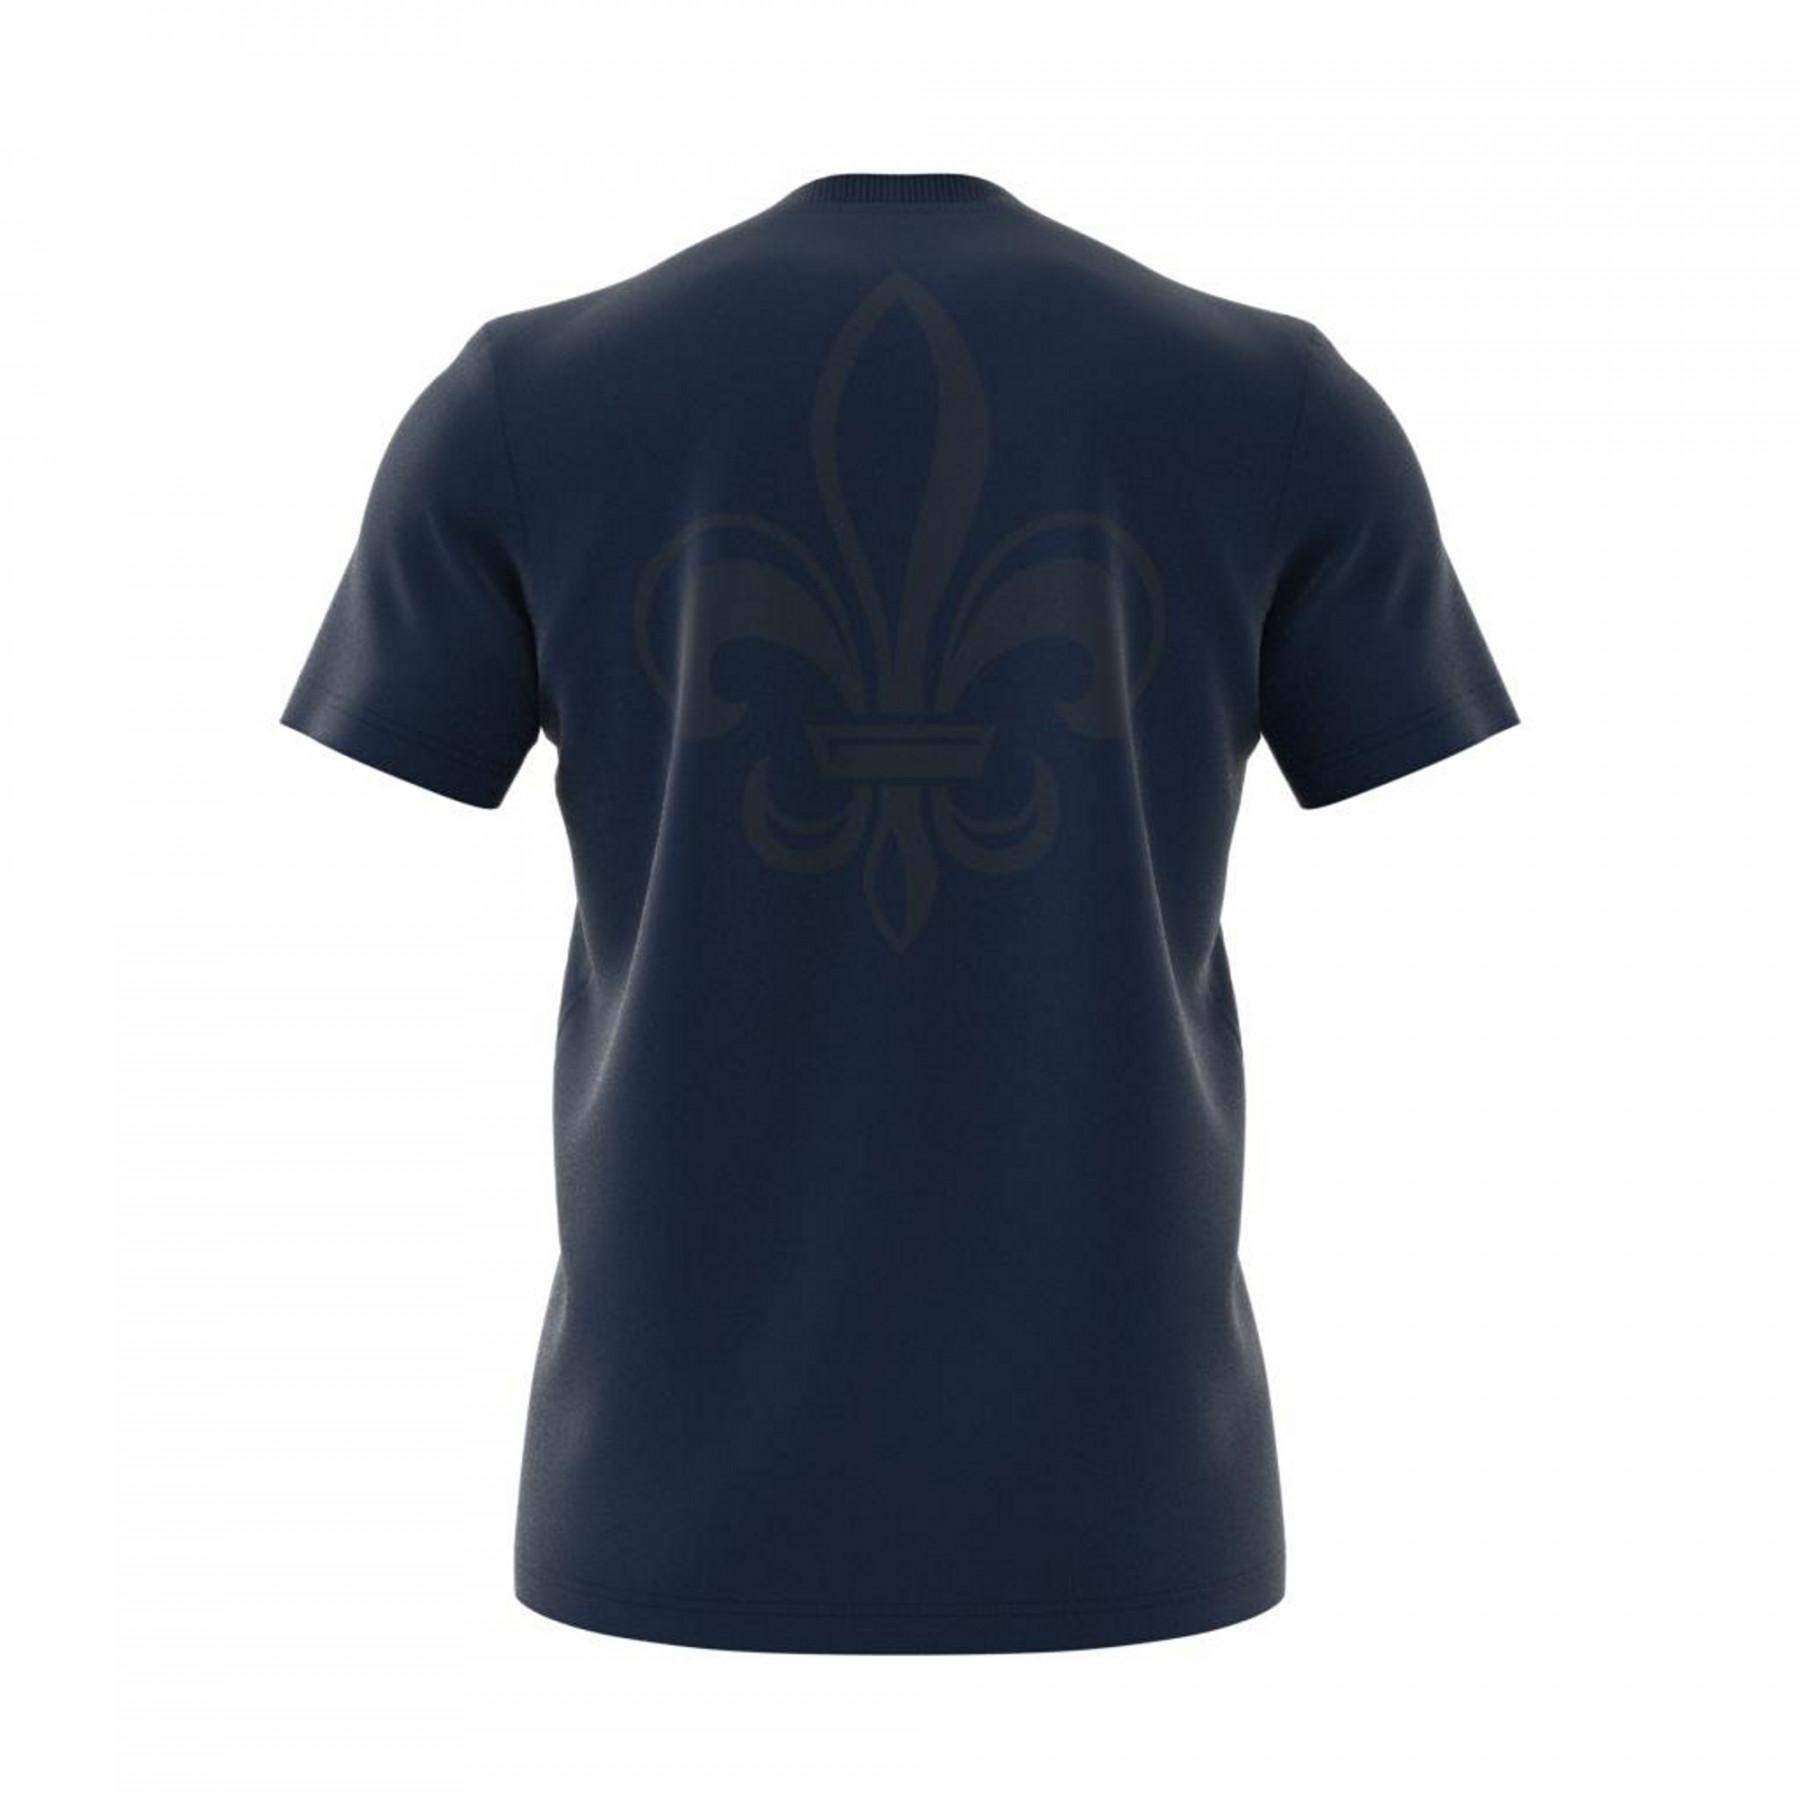 T-shirt adidas France Fan Euro 2020